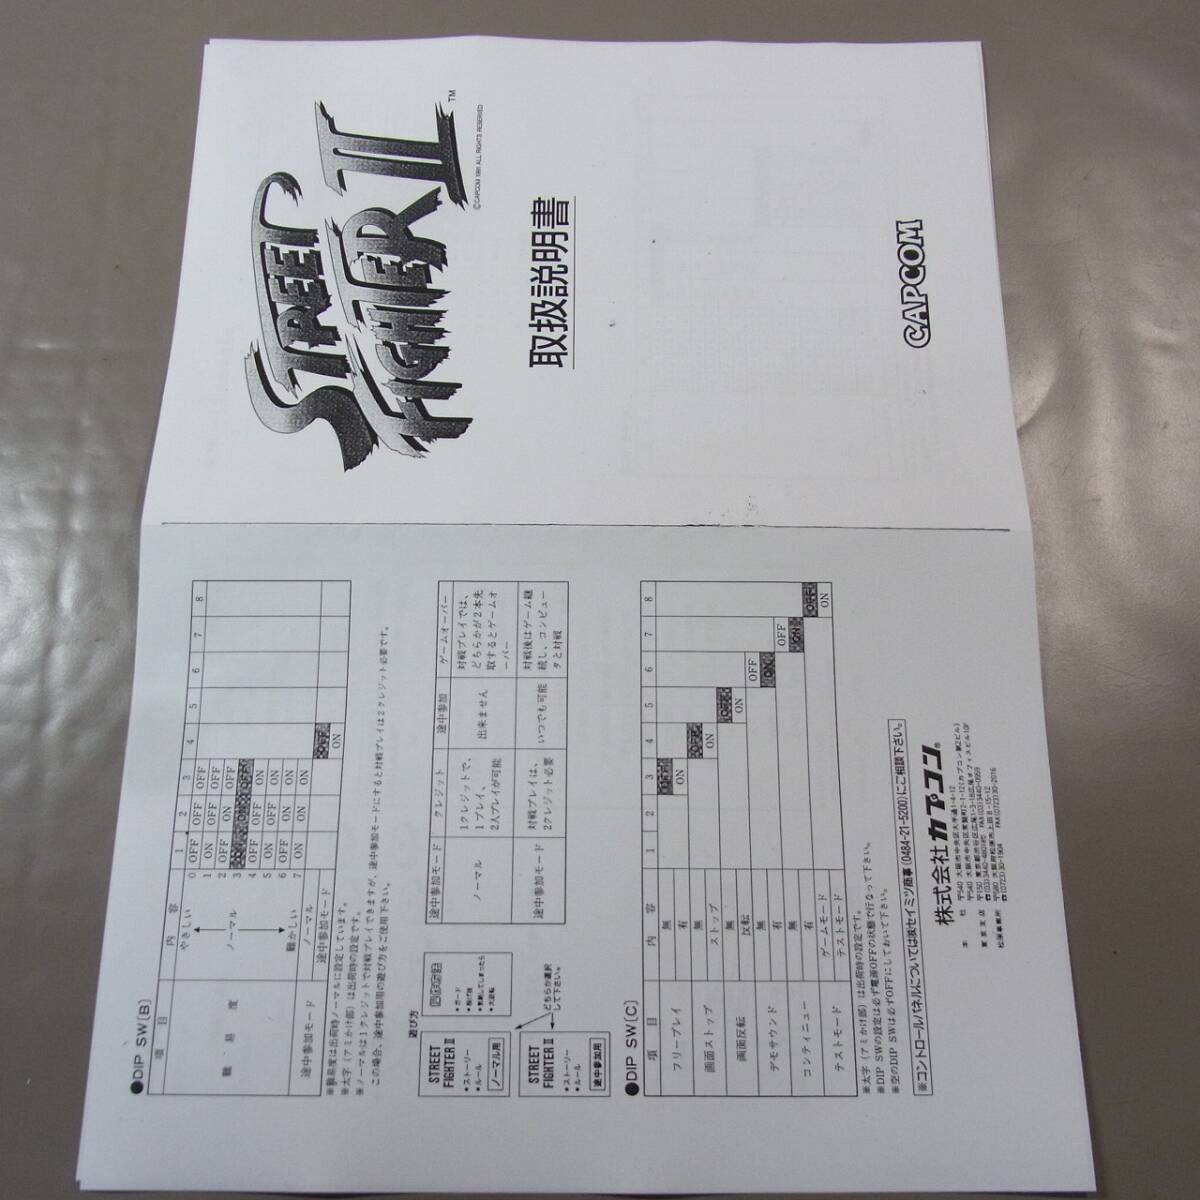  basis board Street Fighter II (C) operation OK Junk [GM;V0AR0173